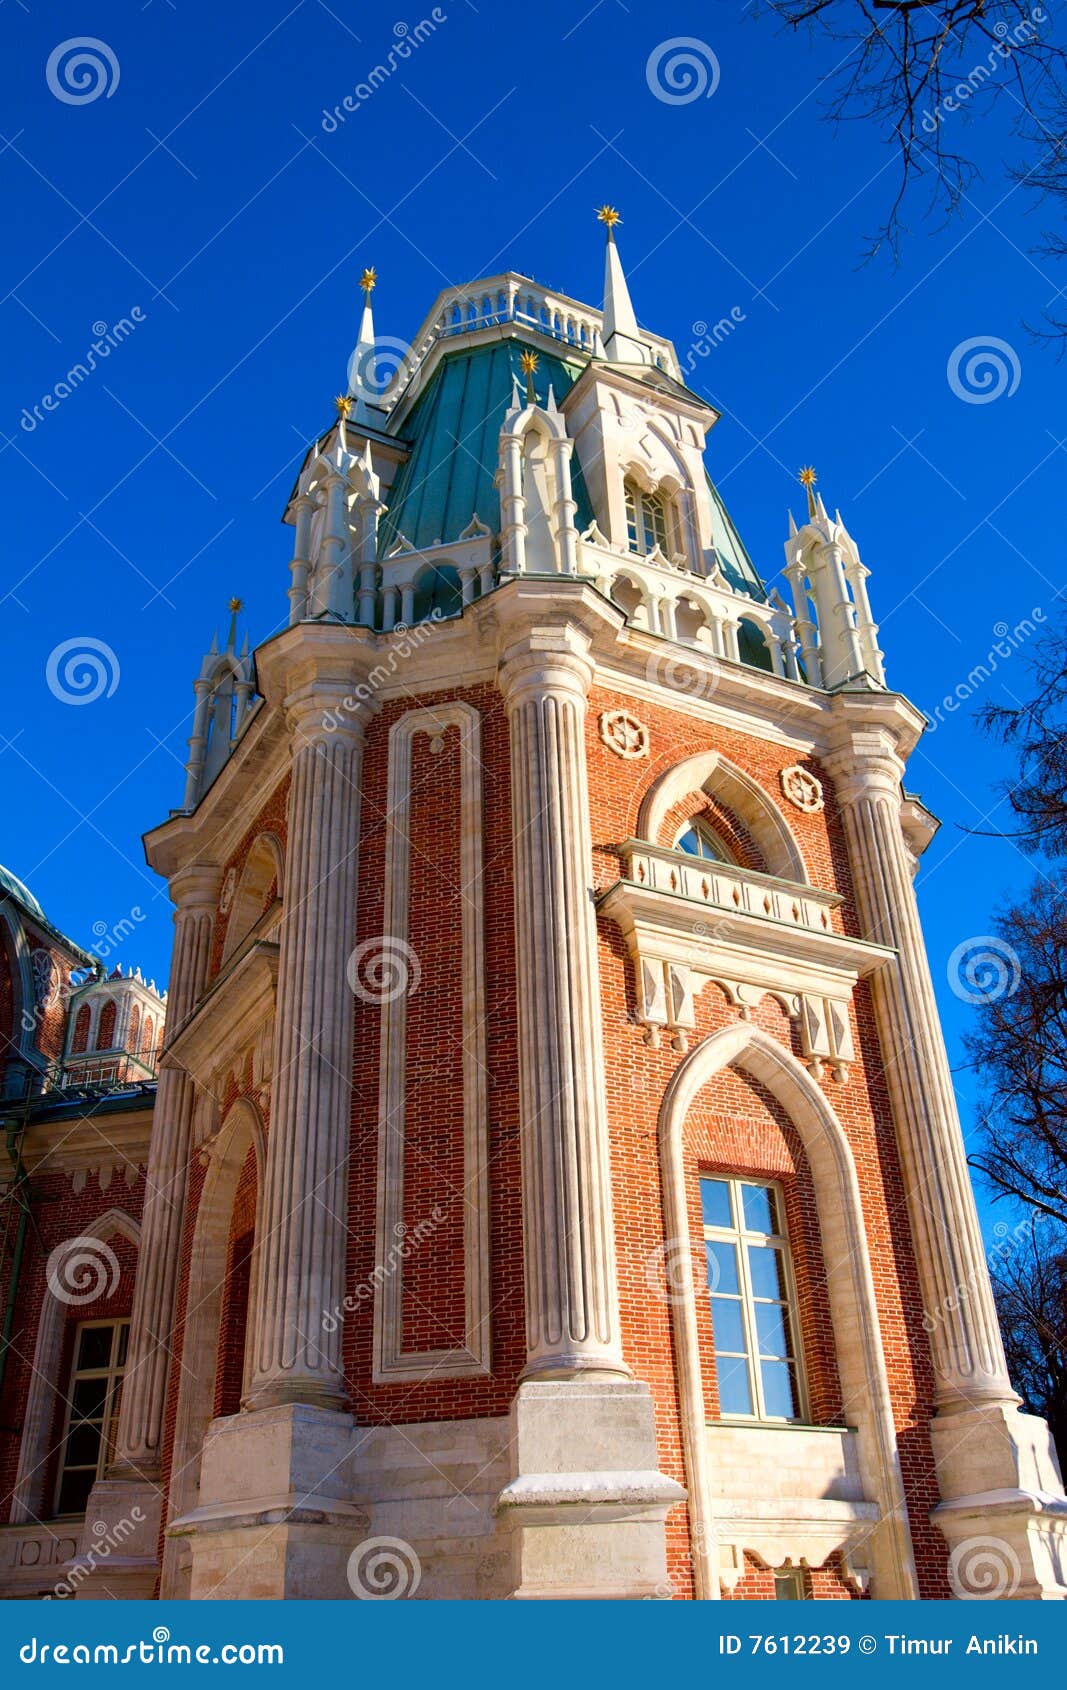 russian classicism architecture